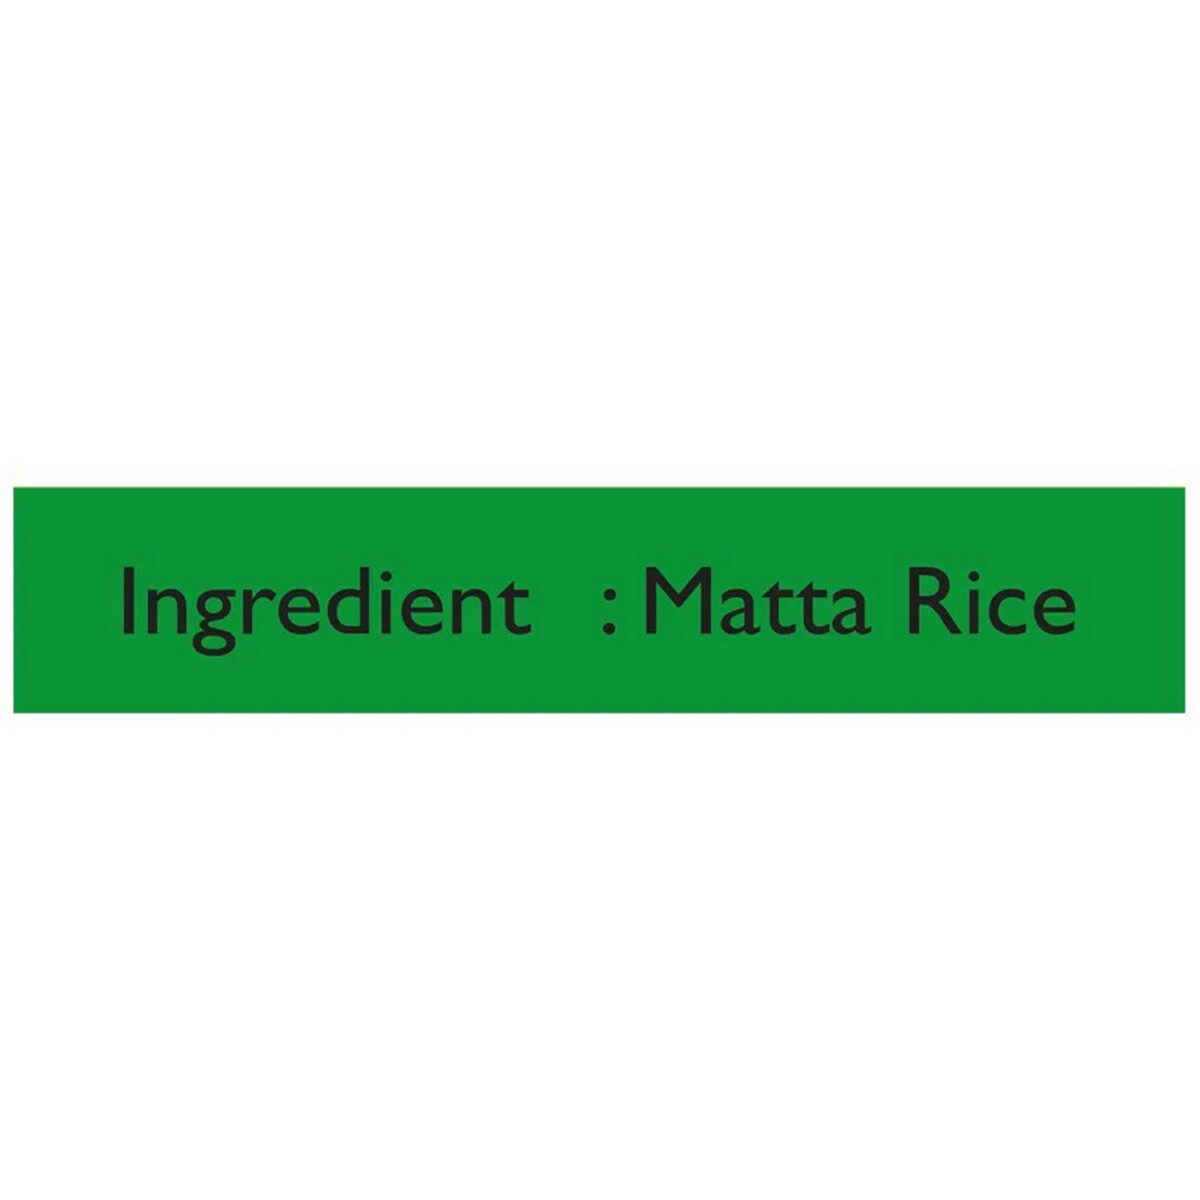 Nirapara Broken Rice 500g